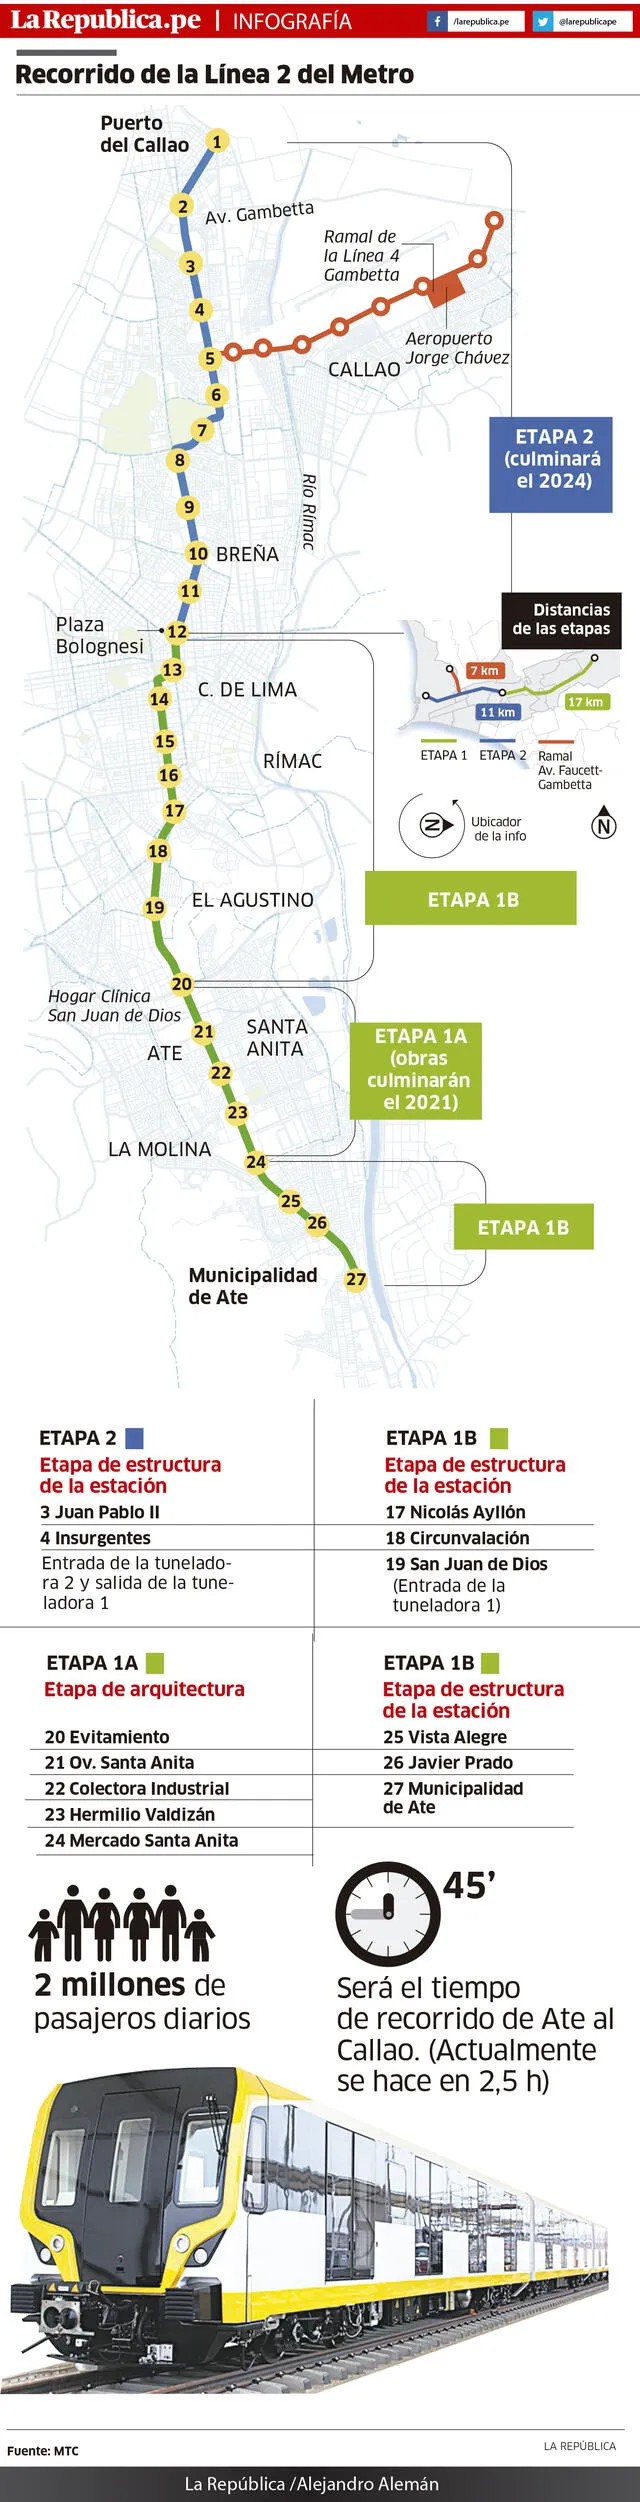 Infografia Linea 2 Metro de Lima